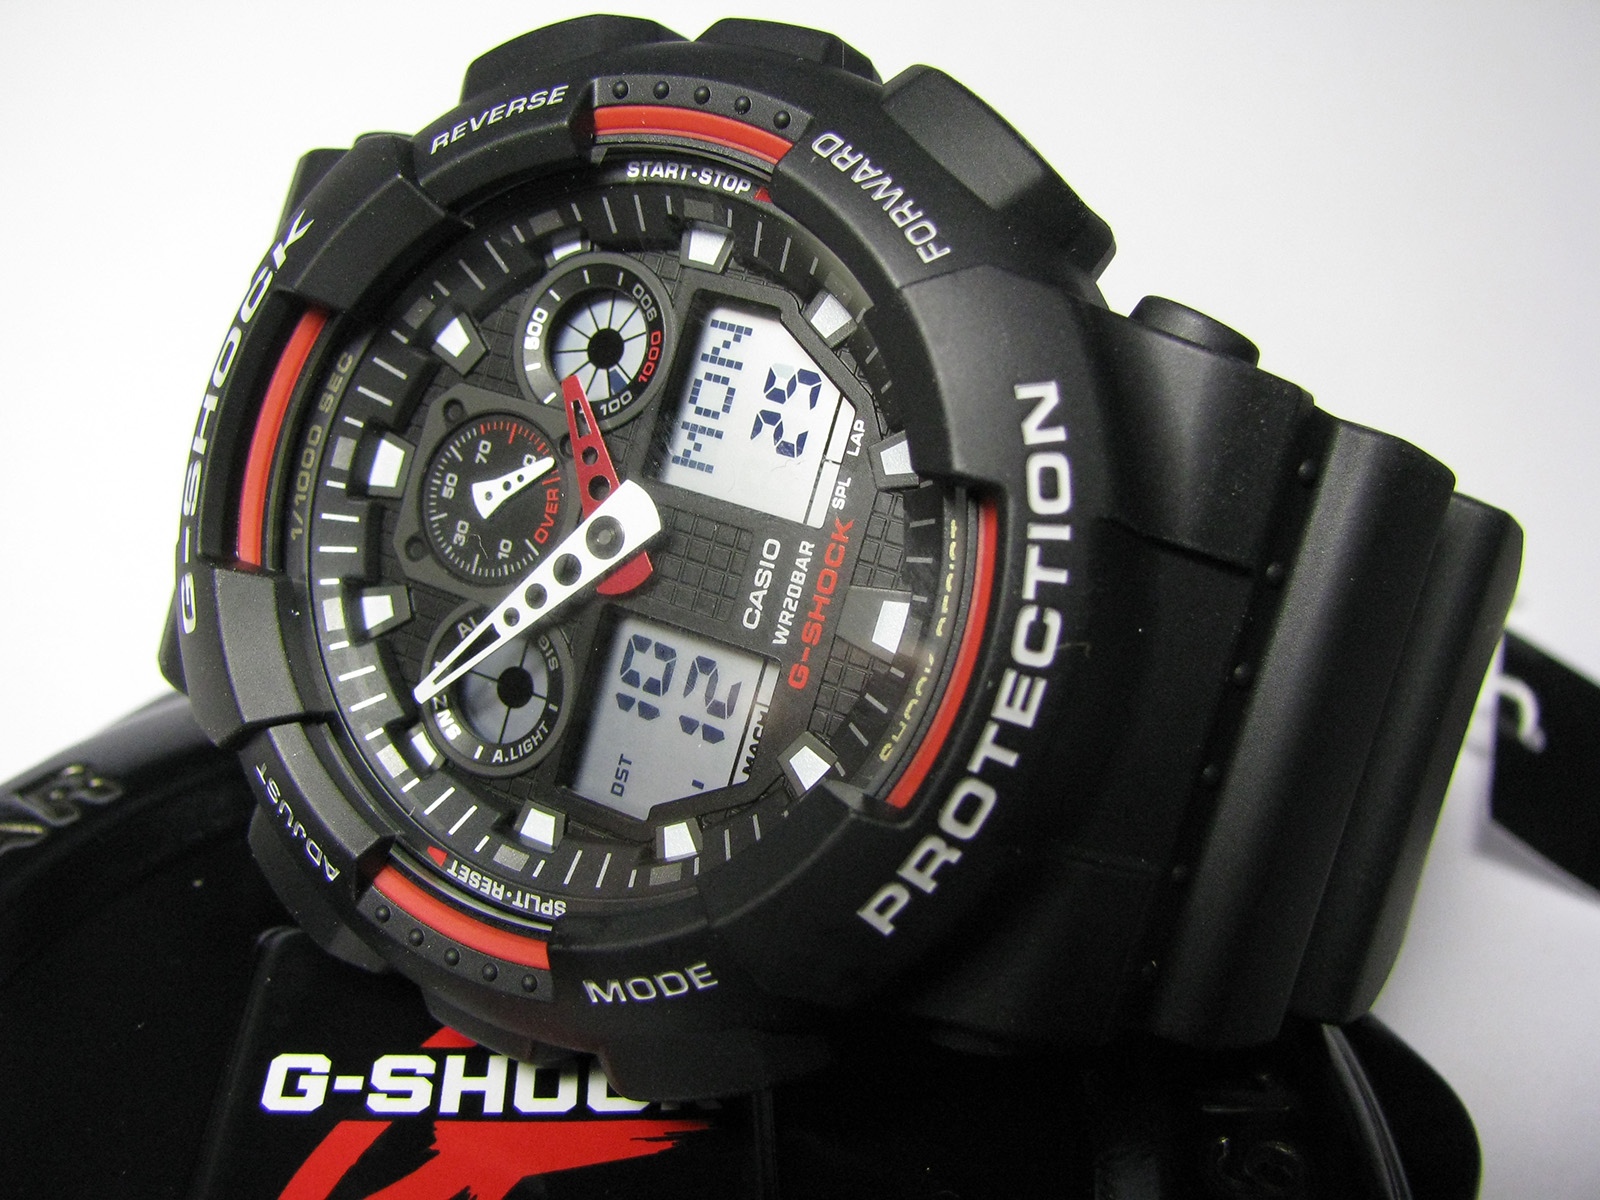 Casio GA-100-1A4 G-Shock Watch ⋆ High Quality Watch Gallery1600 x 1200